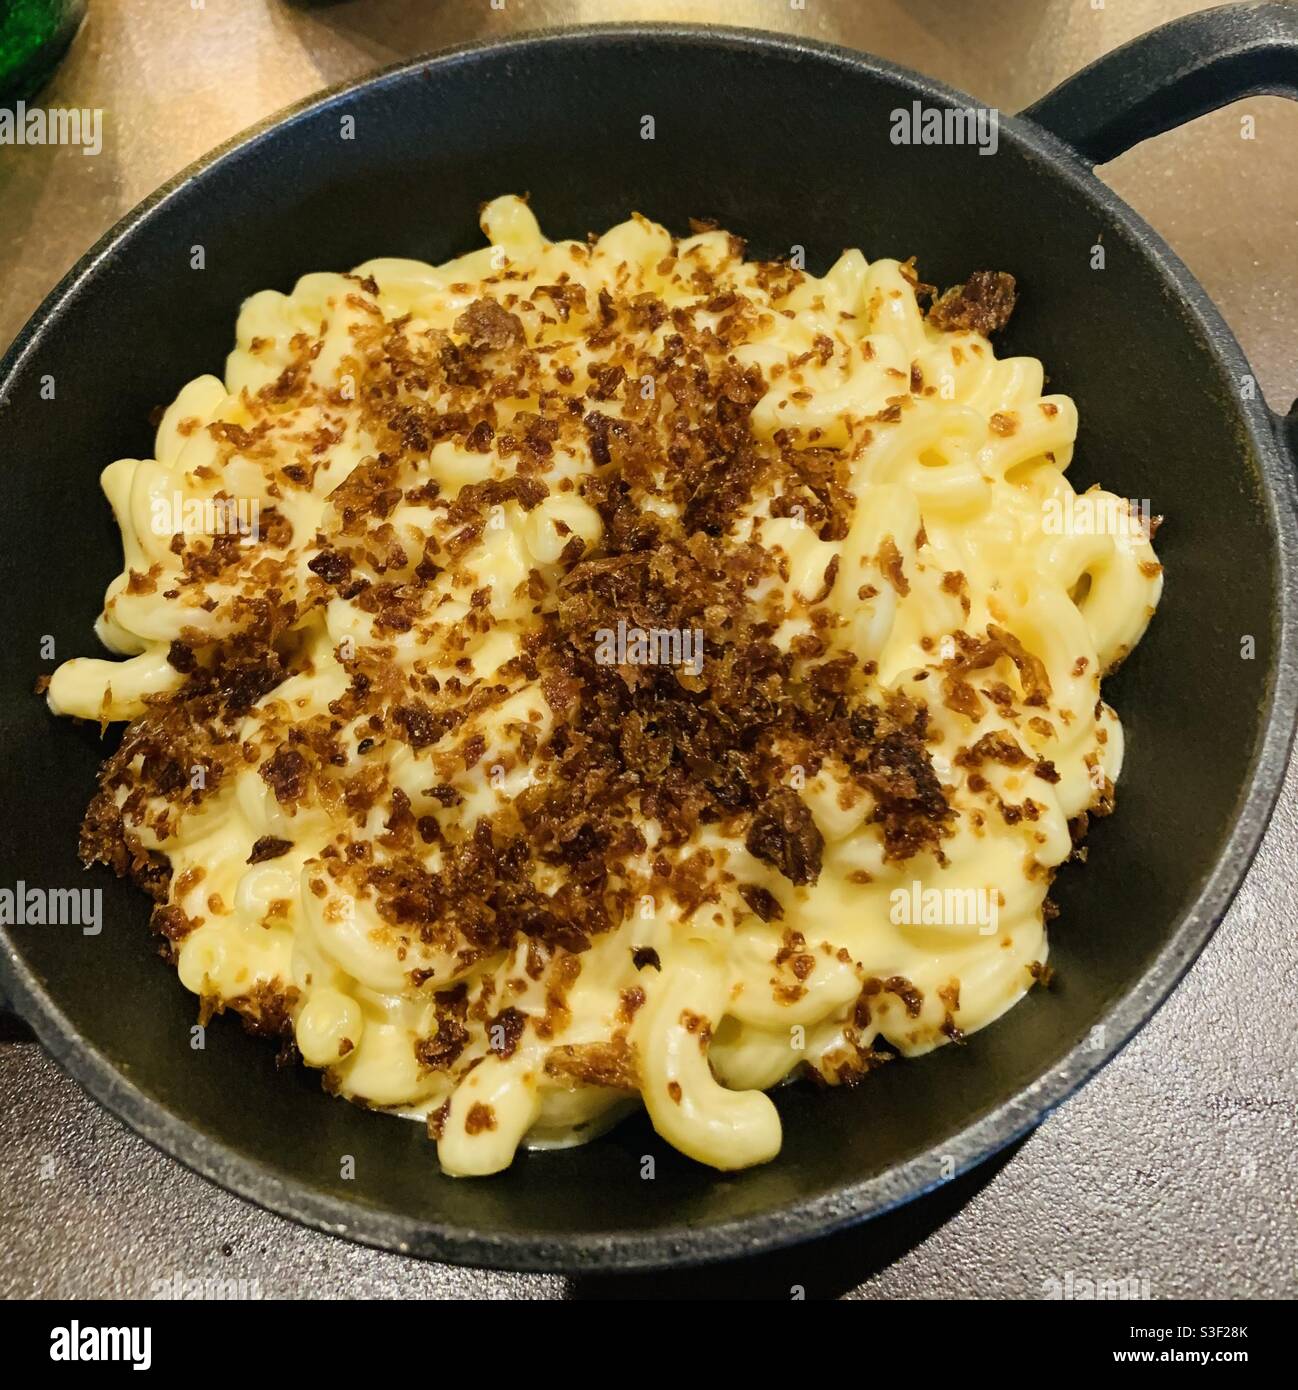 Mac & cheese on a pan. Stock Photo